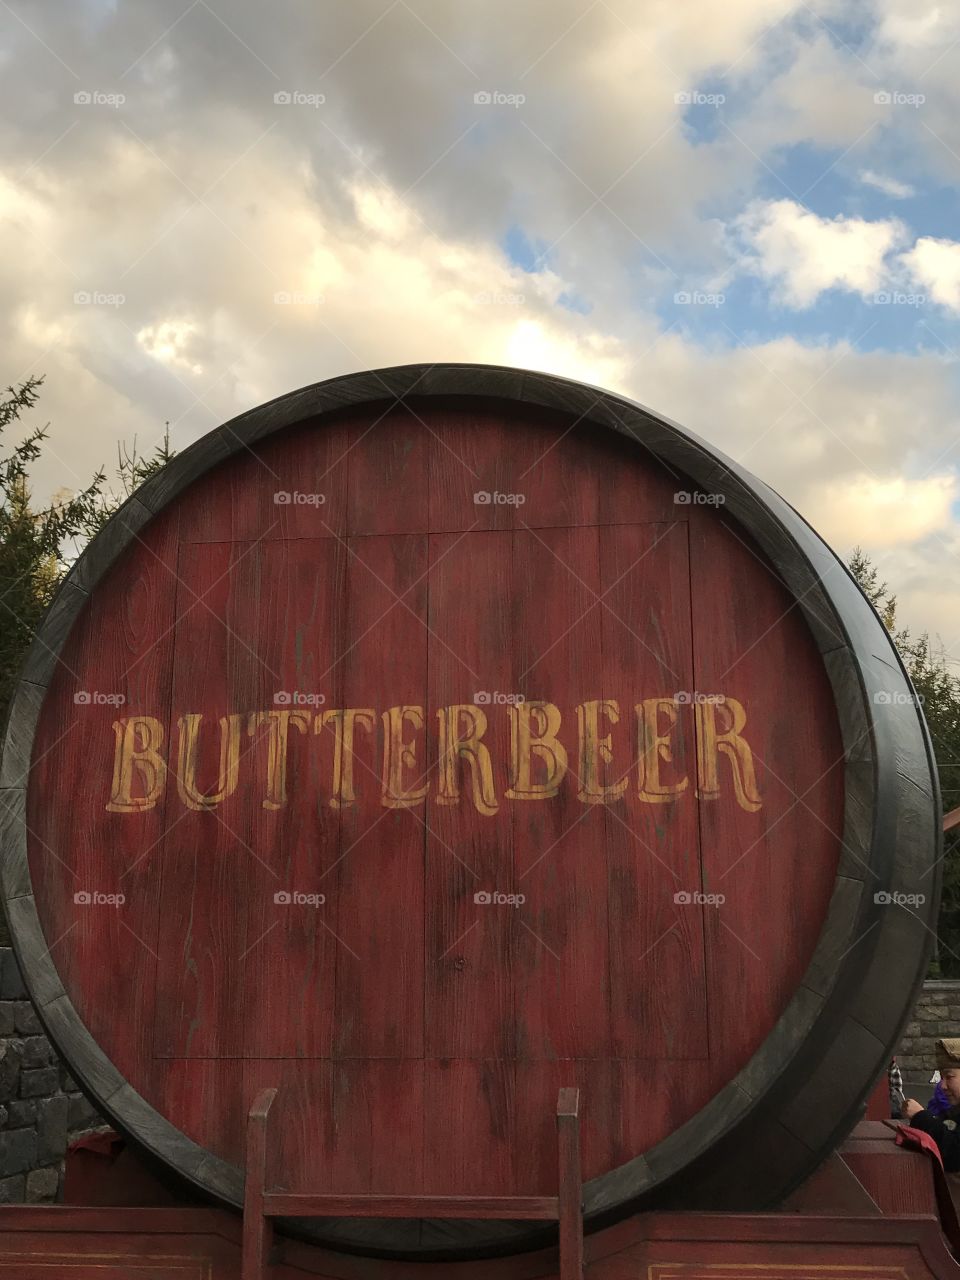 Butterbear nonalcoholic barrel yummy drinks 